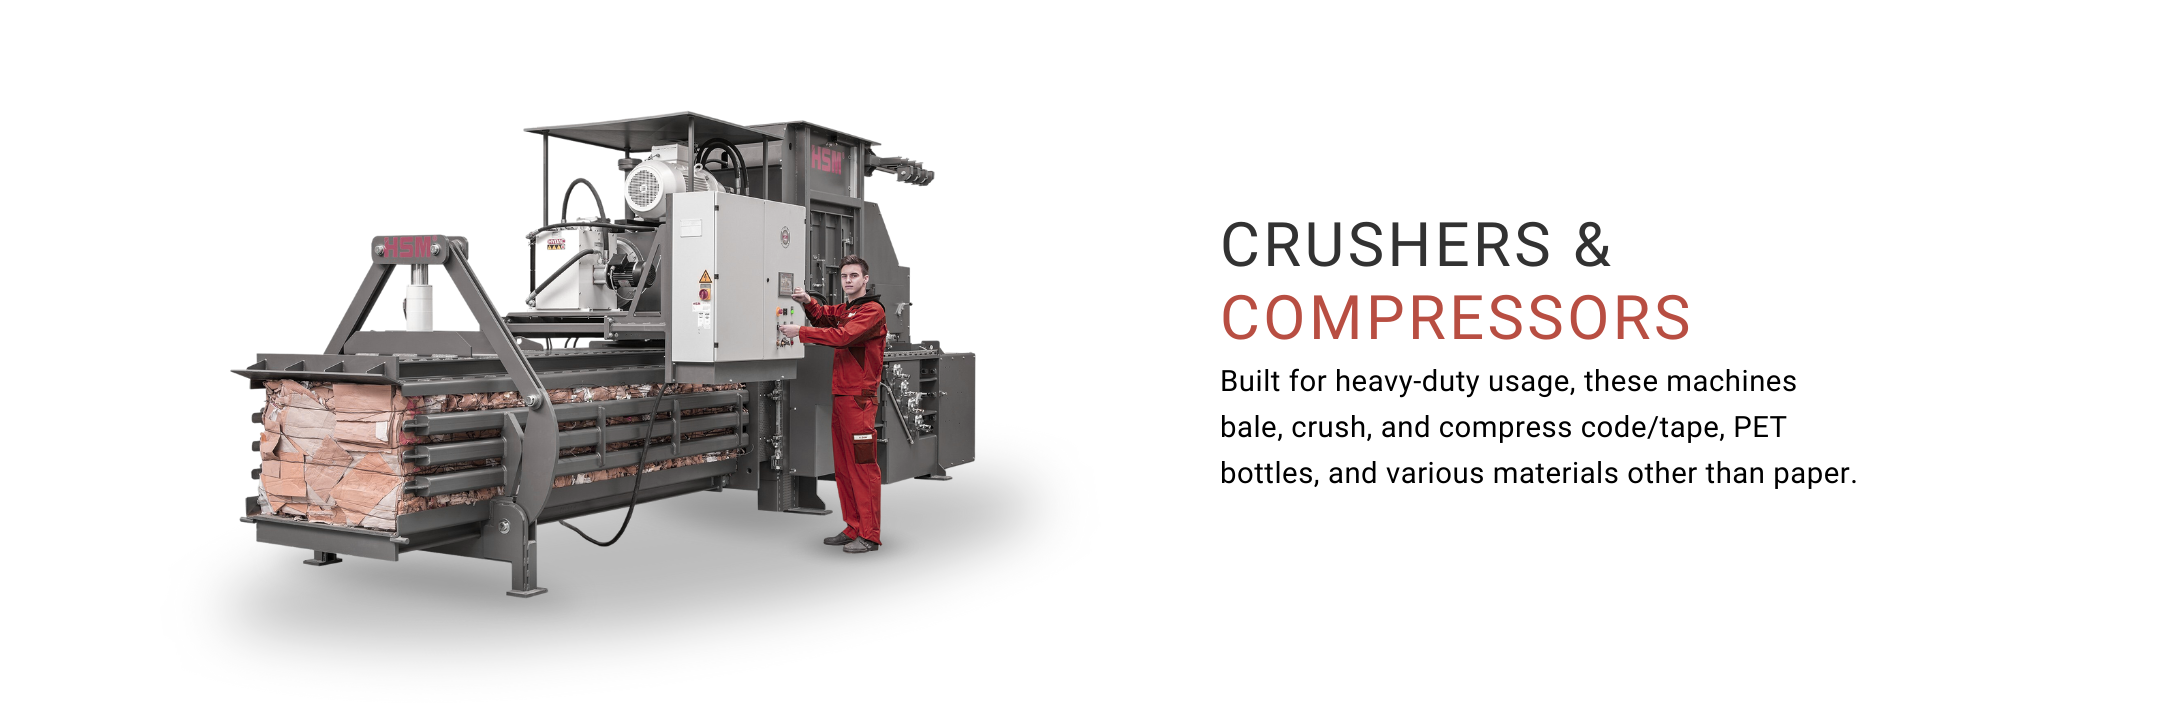 HSM-Crushers-And-Compressors-USA-2